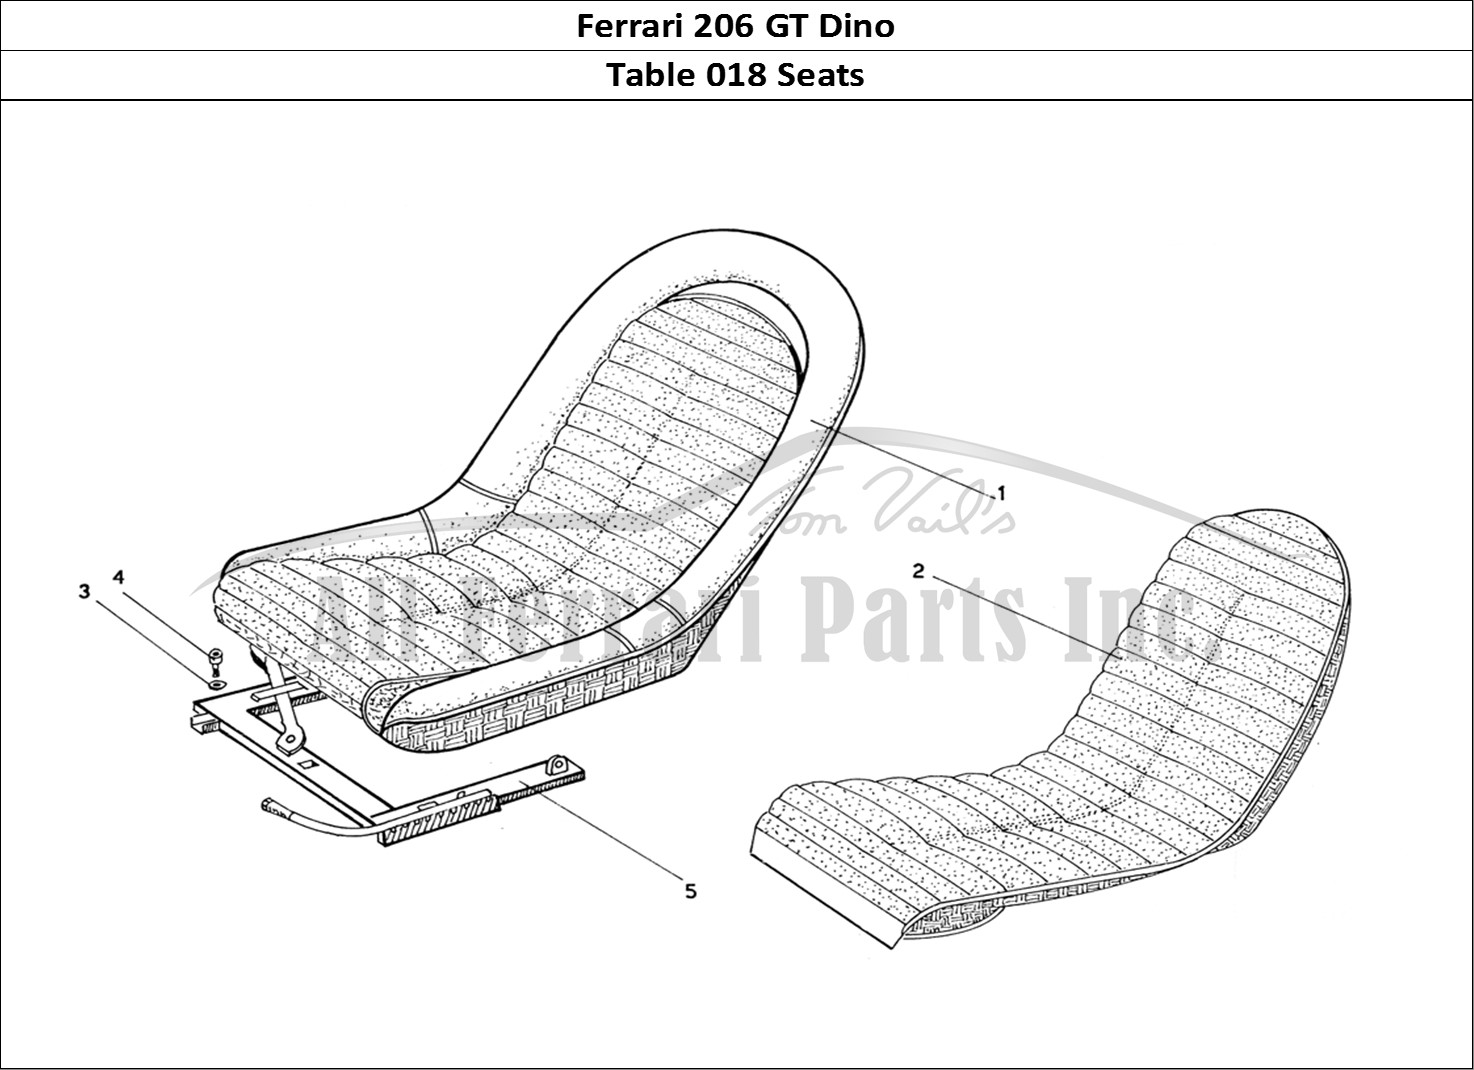 Ferrari Parts Ferrari 206 GT Dino (Coachwork) Page 018 Seats